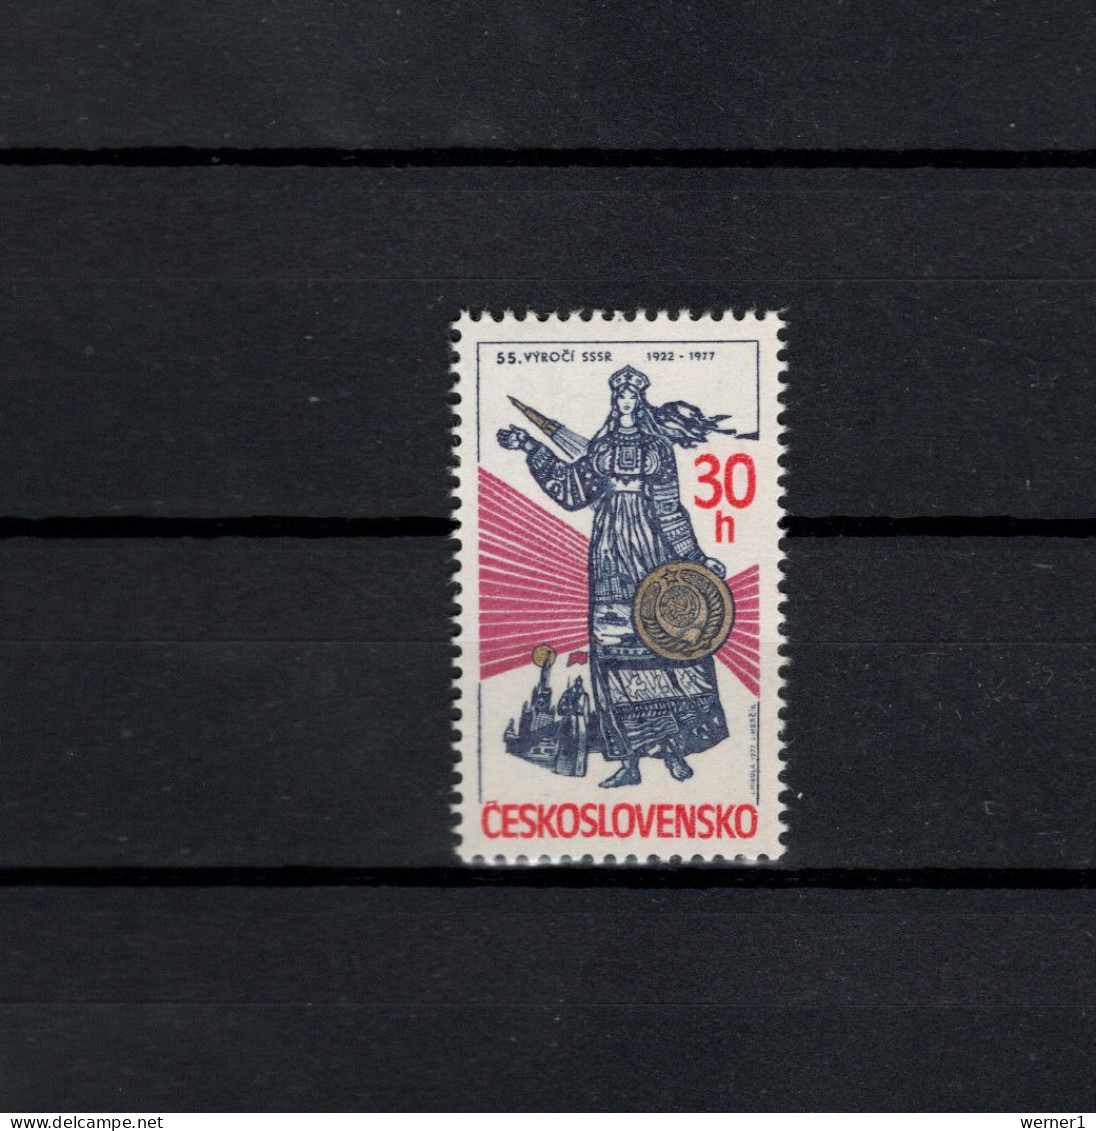 Czechoslovakia 1977 Space, October Revolution Stamp MNH - Europe